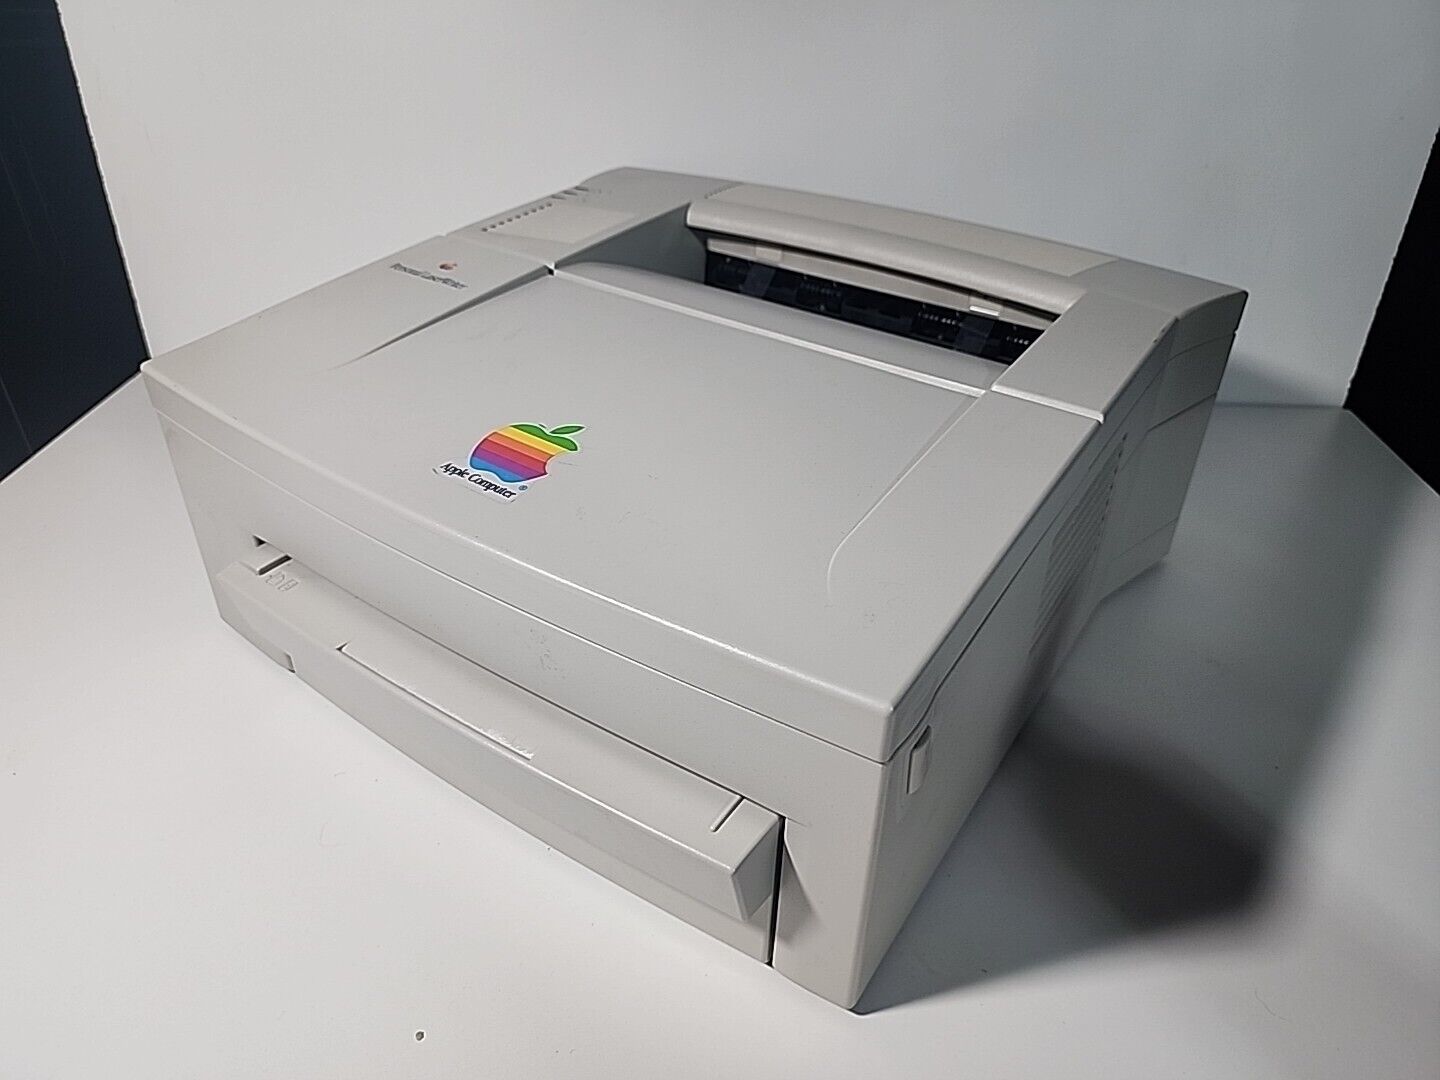 1995 Apple Personal Laserwriter 300 Computer Printer UNTESTED PARTS & REPAIR